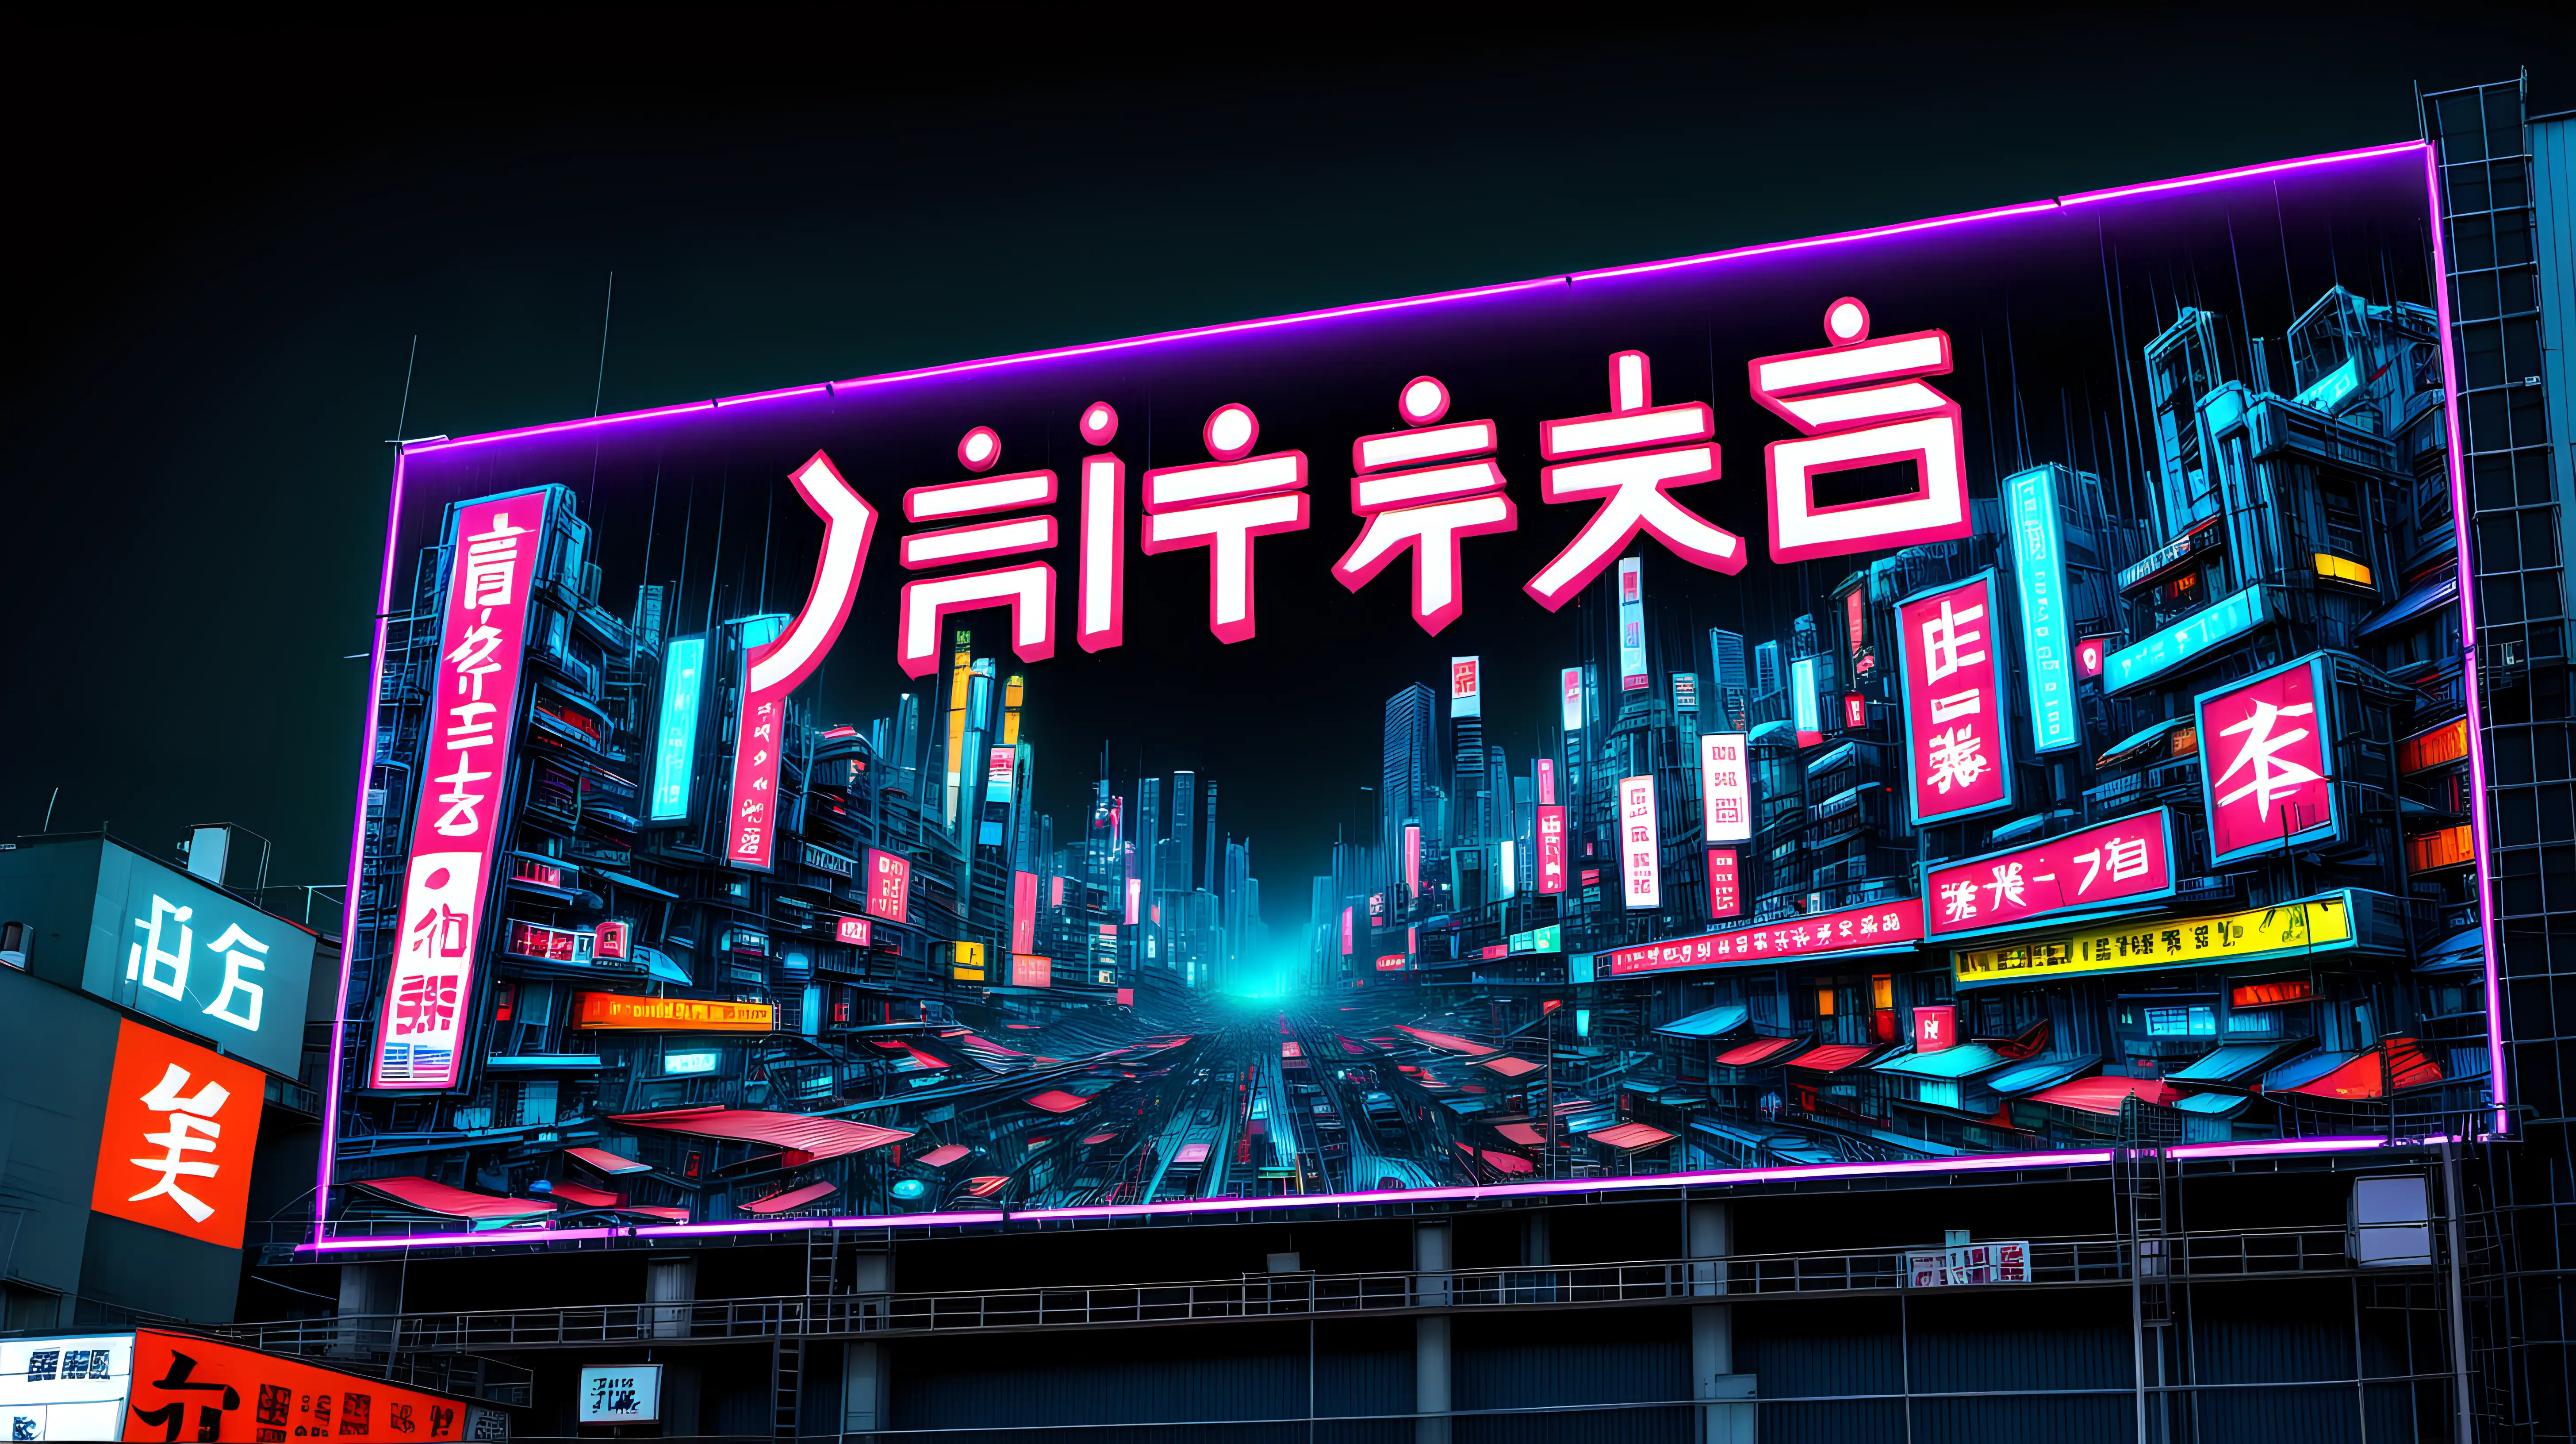 Futuristic Japanese Cyberpunk City with Vibrant Neon Billboards